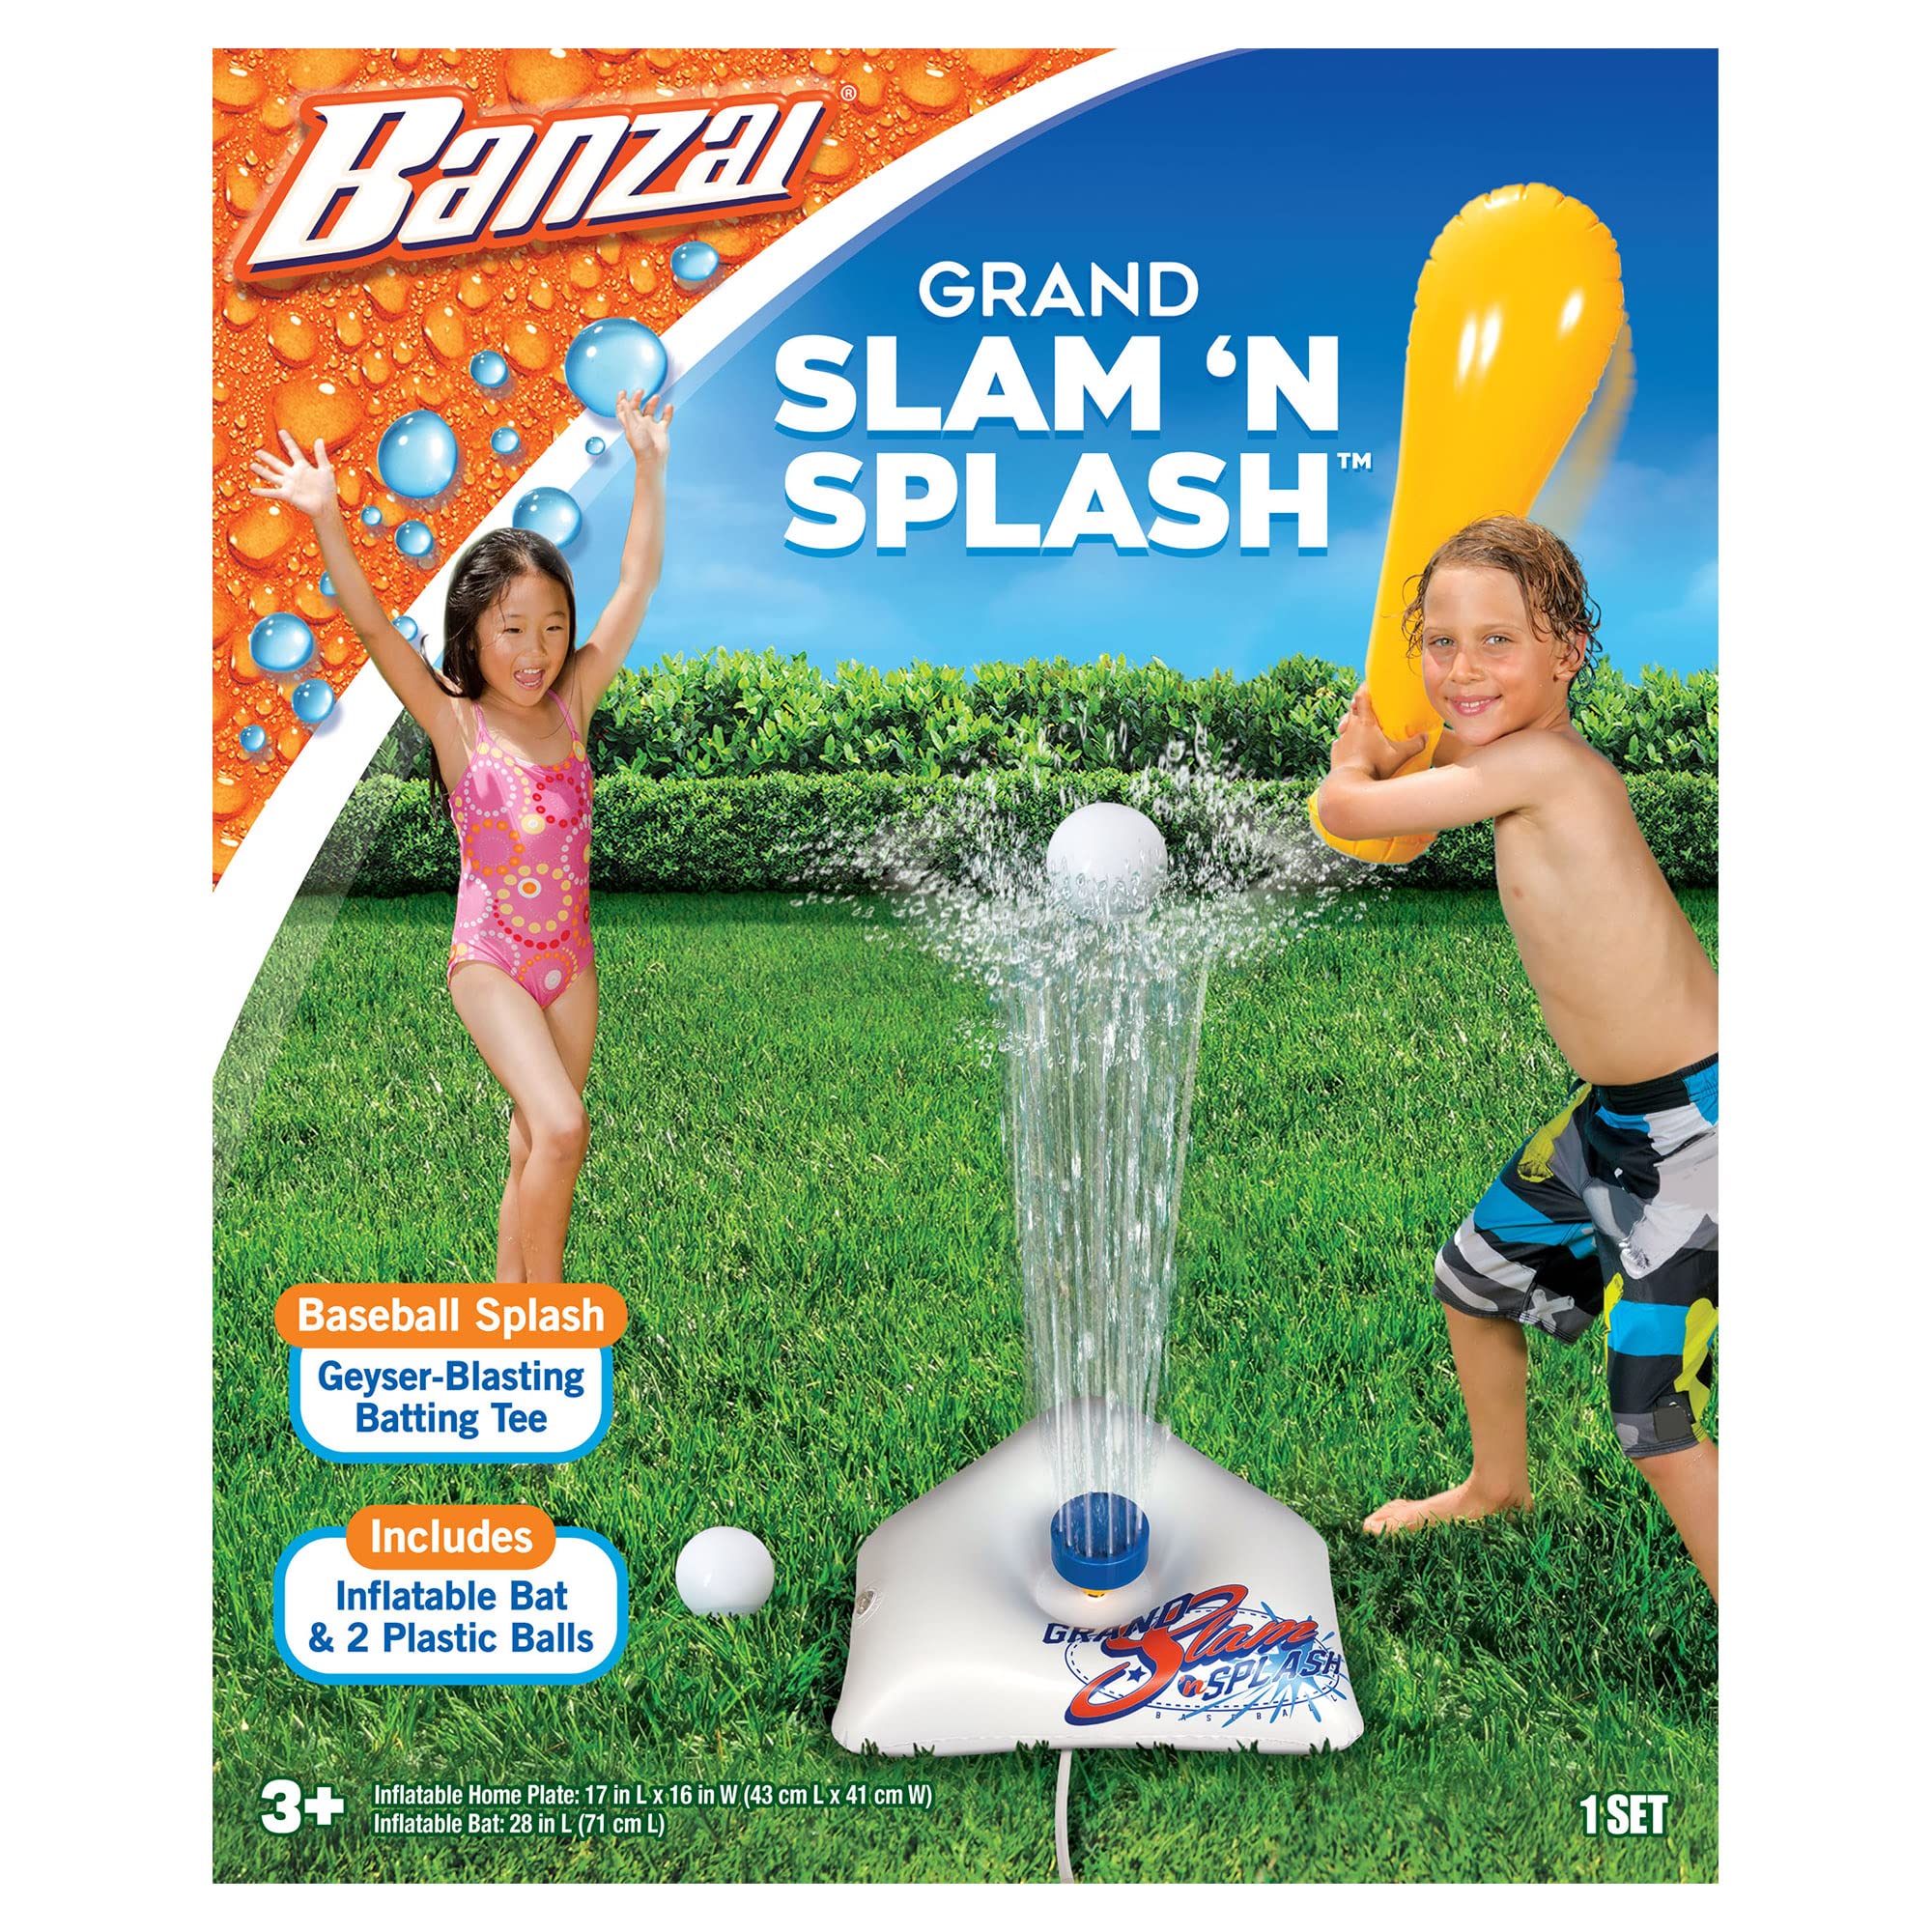 Banzai Grand Slam N Splash w/ 28" Inflatable Bat & 2 Plastic Baseballs $6.49 + Free Shipping w/ Prime or on $25+